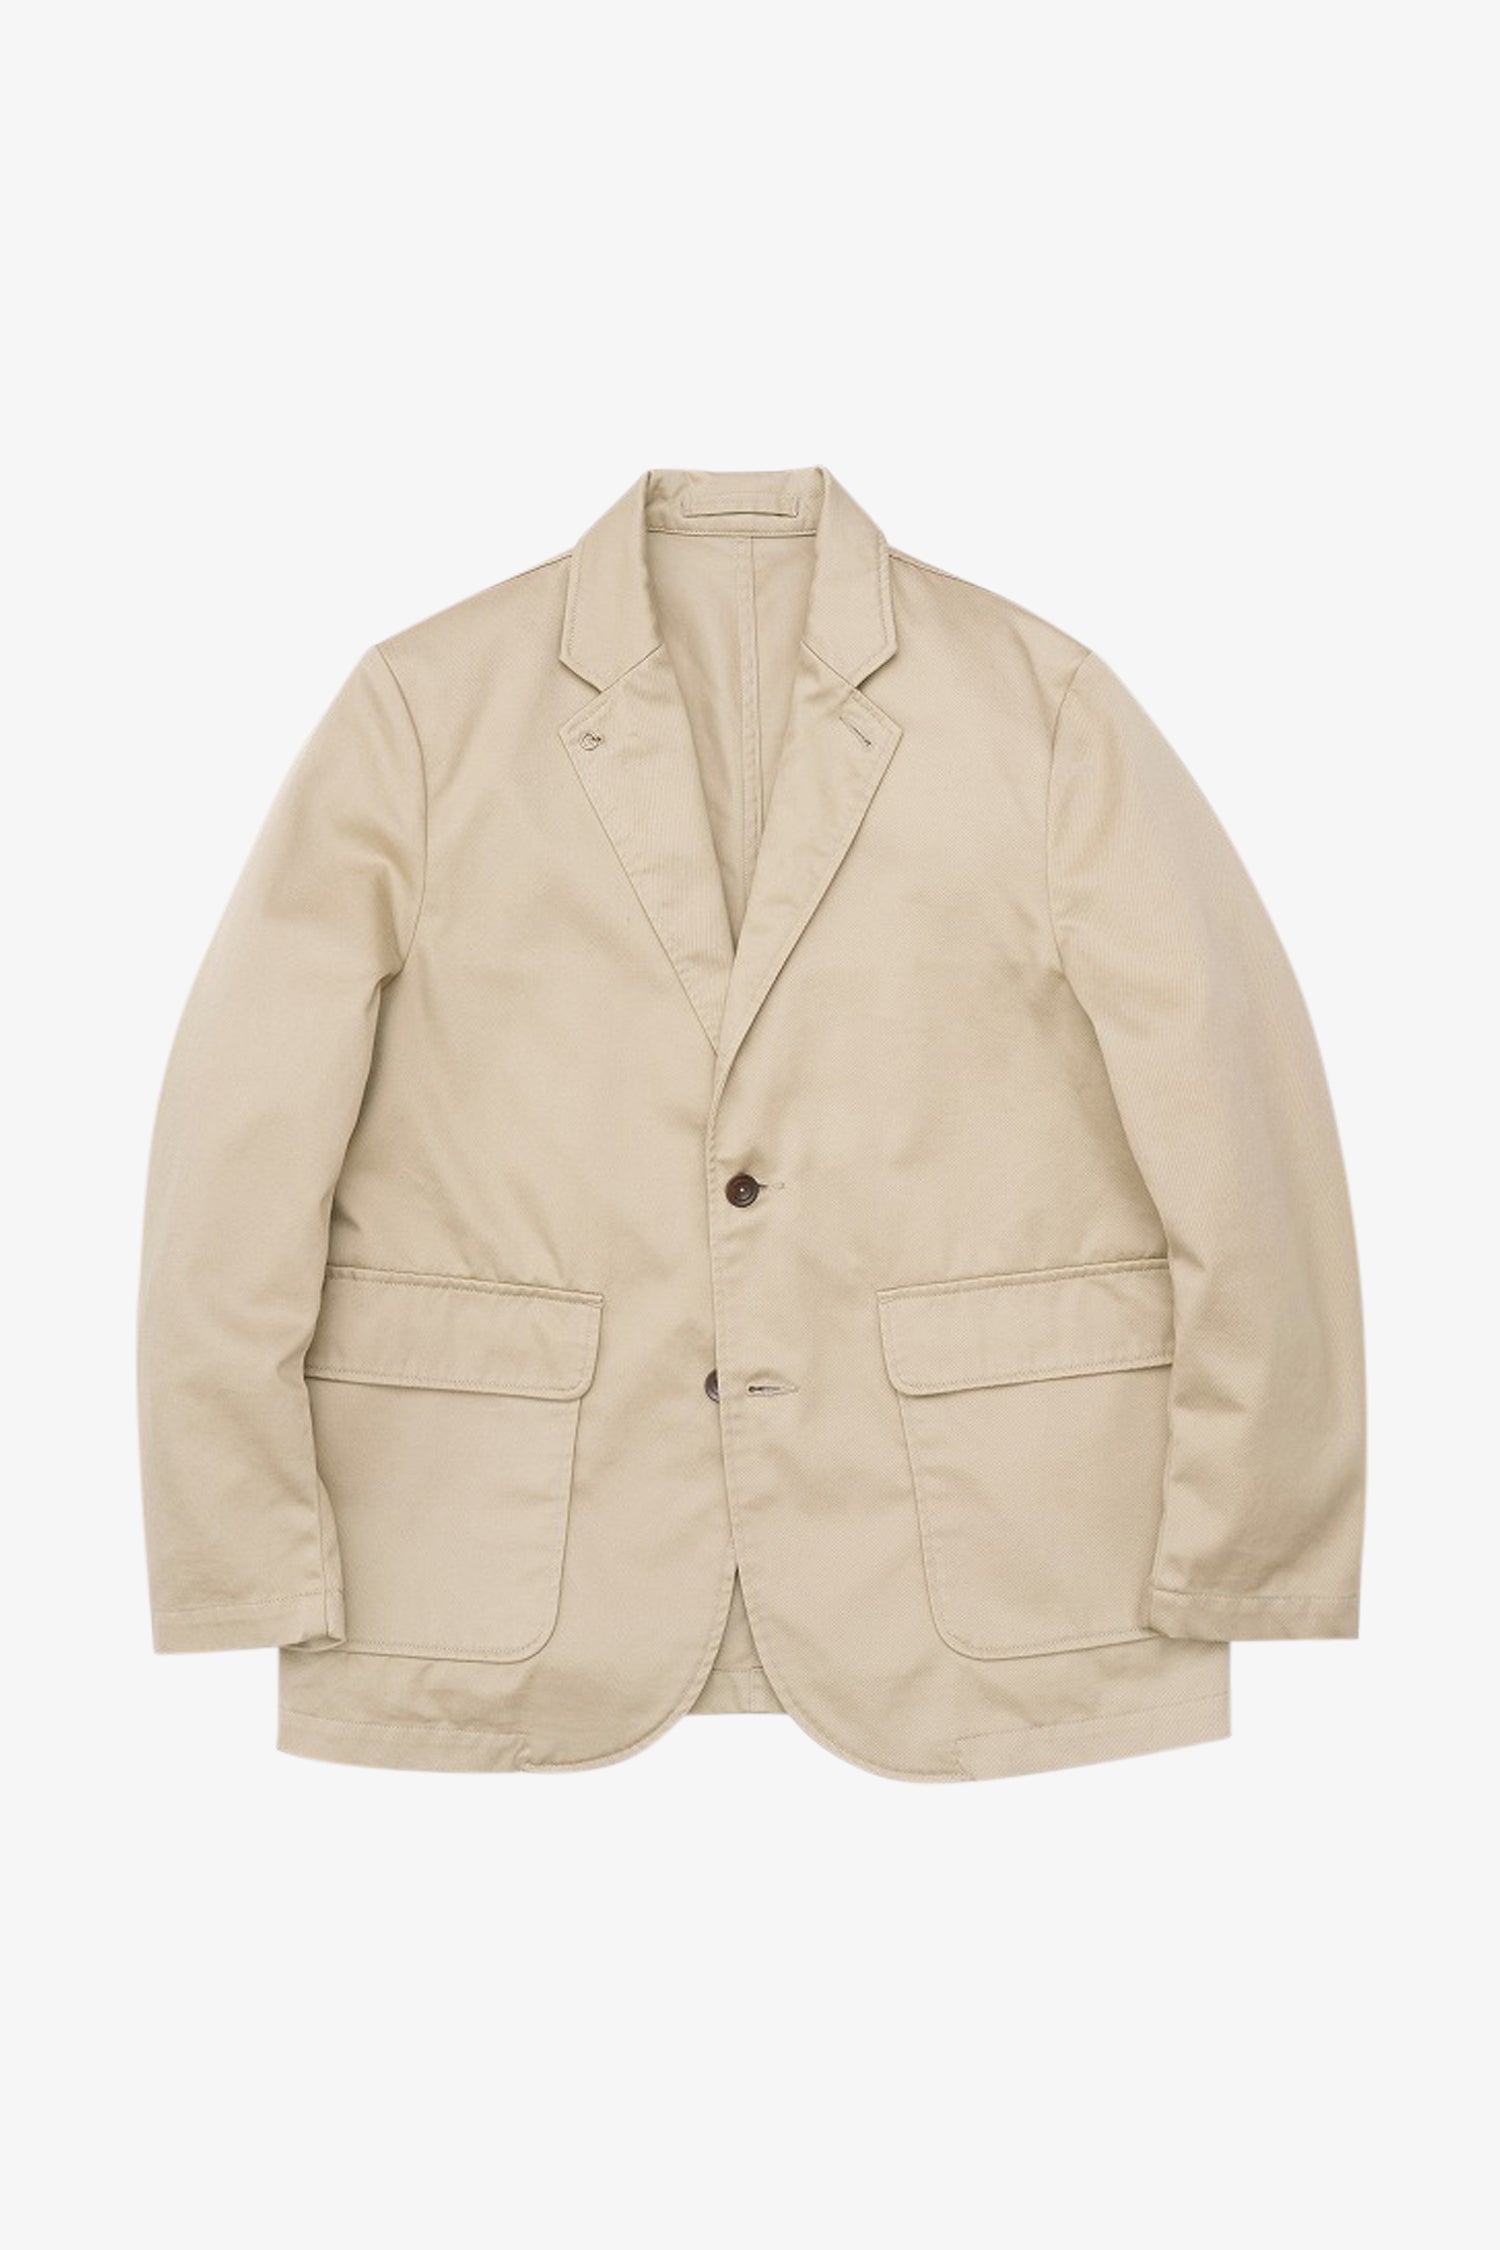 Selectshop FRAME - NANAMICA Chino Club Jacket Outerwear Dubai